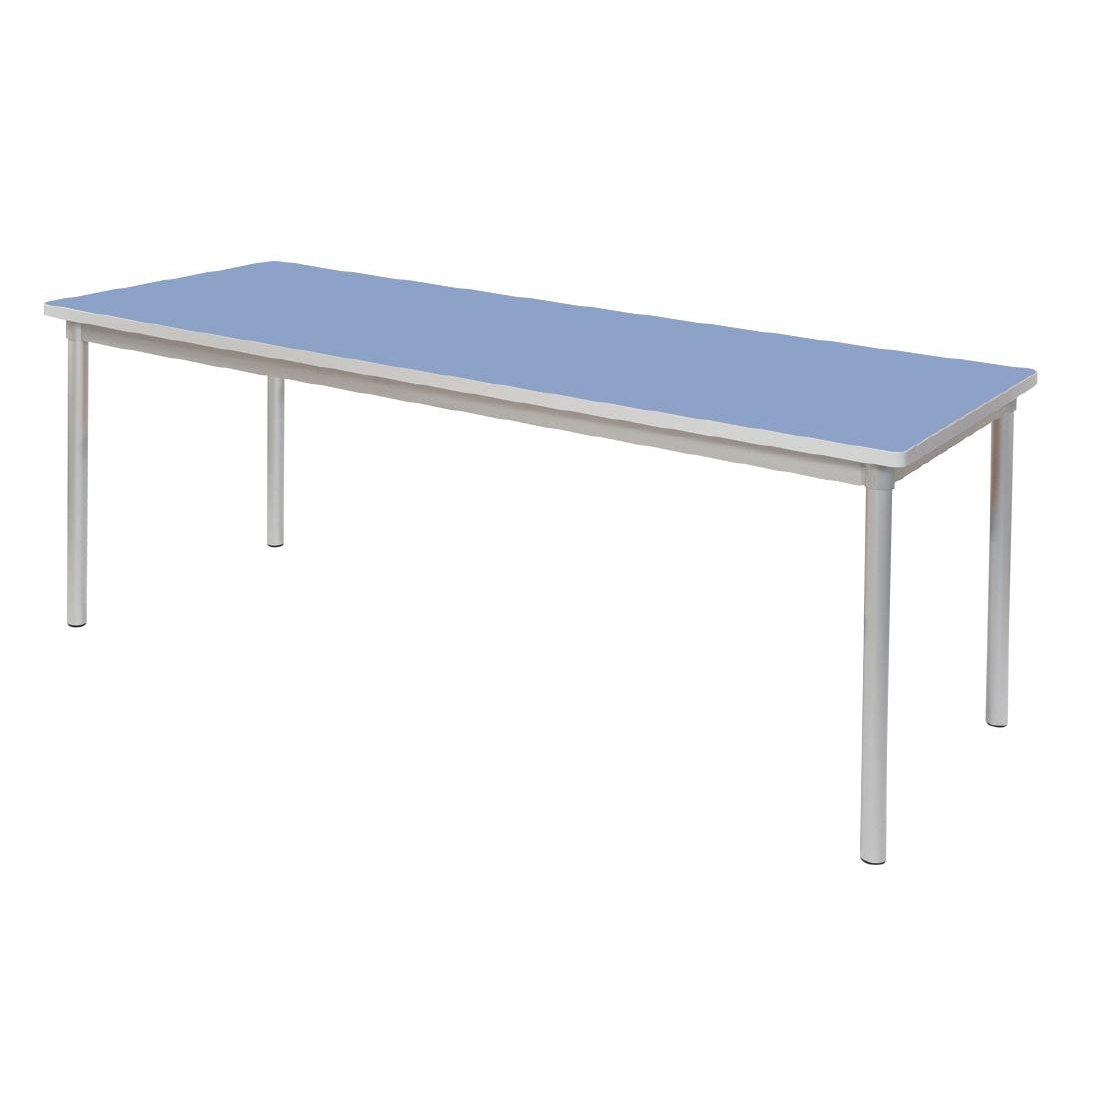 Gopak Enviro Indoor Campanula Blue Rectangle Dining Table 1800mm